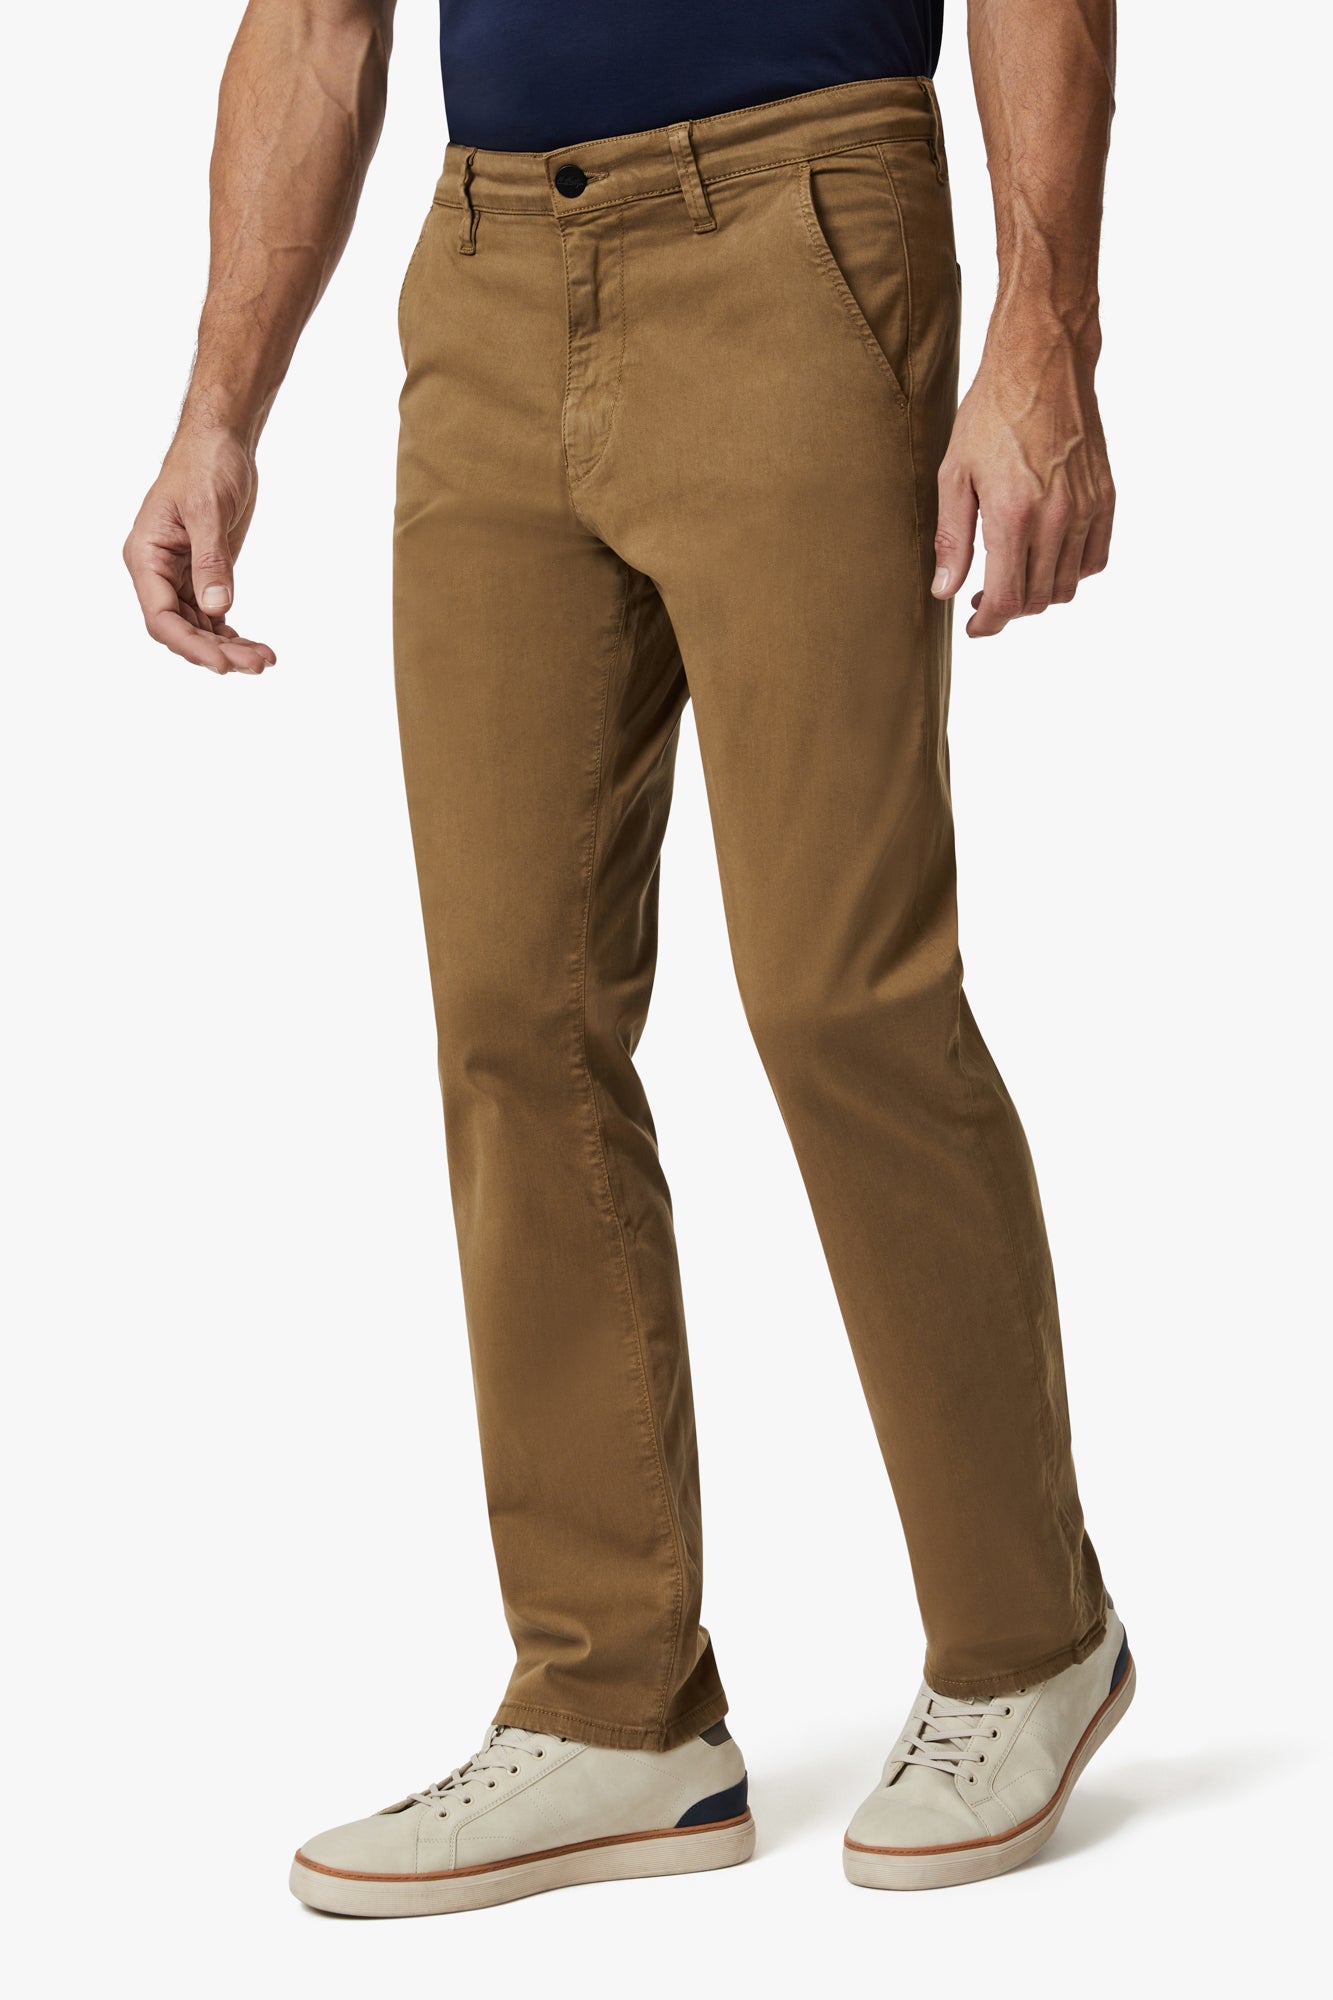 Twill Pants [PA521-TWILL-KHAKI] - FlynnO'Hara Uniforms